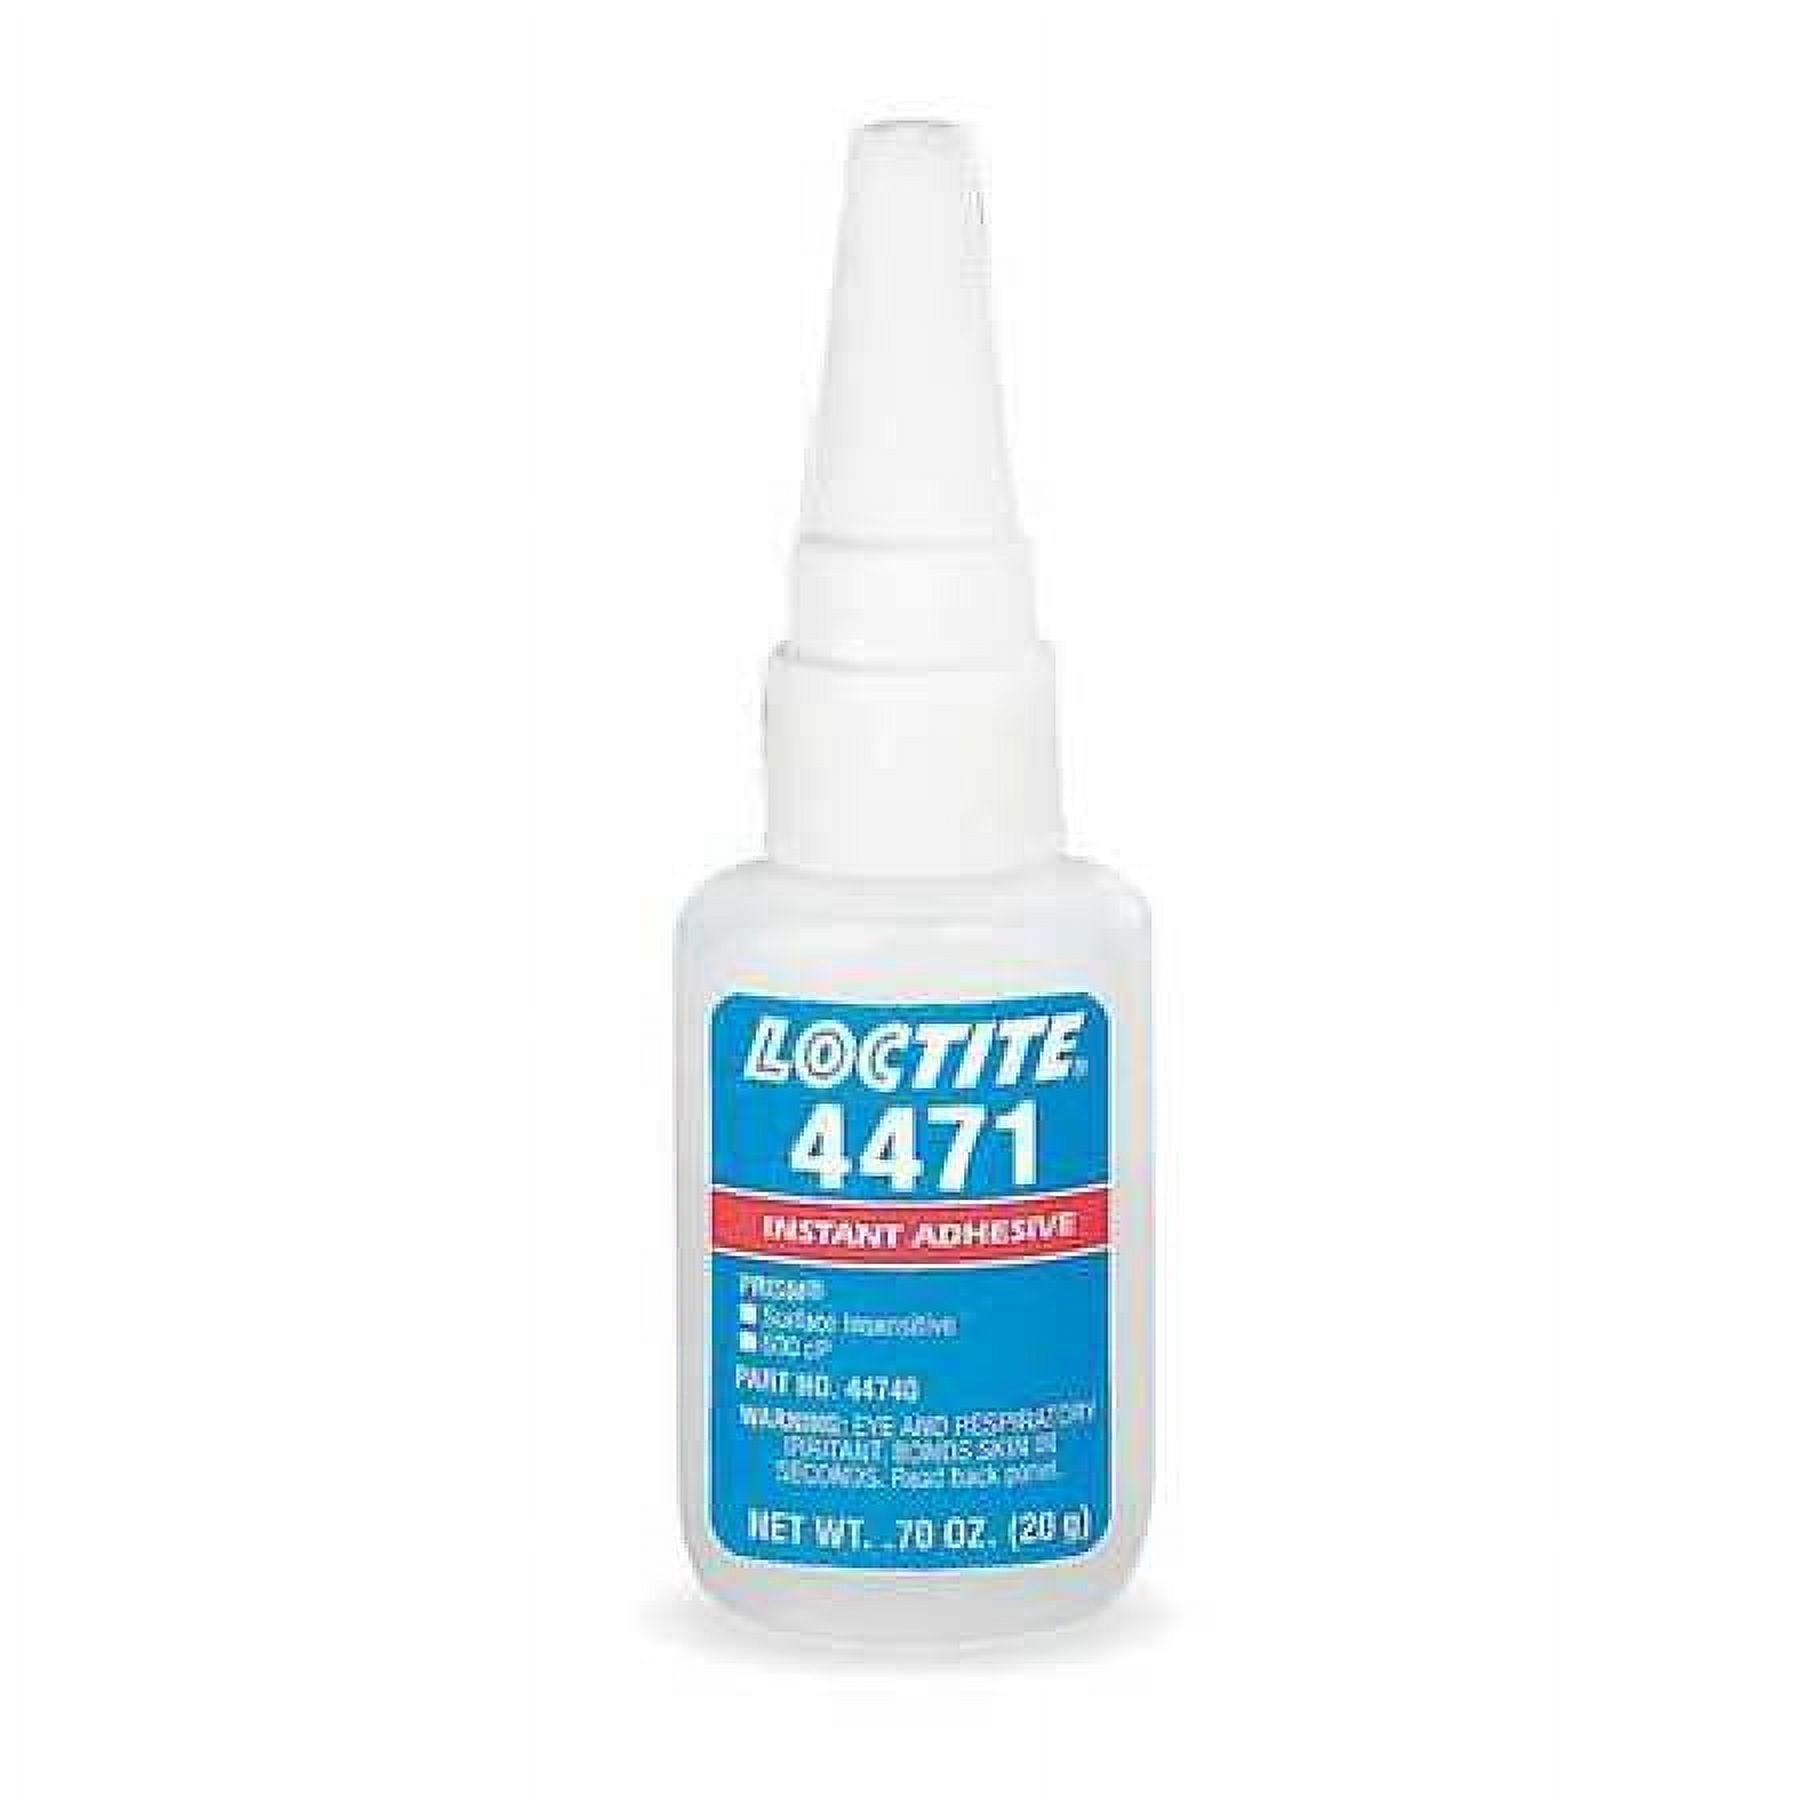 Loctite 13.5 oz. High-Performance Spray Adhesive